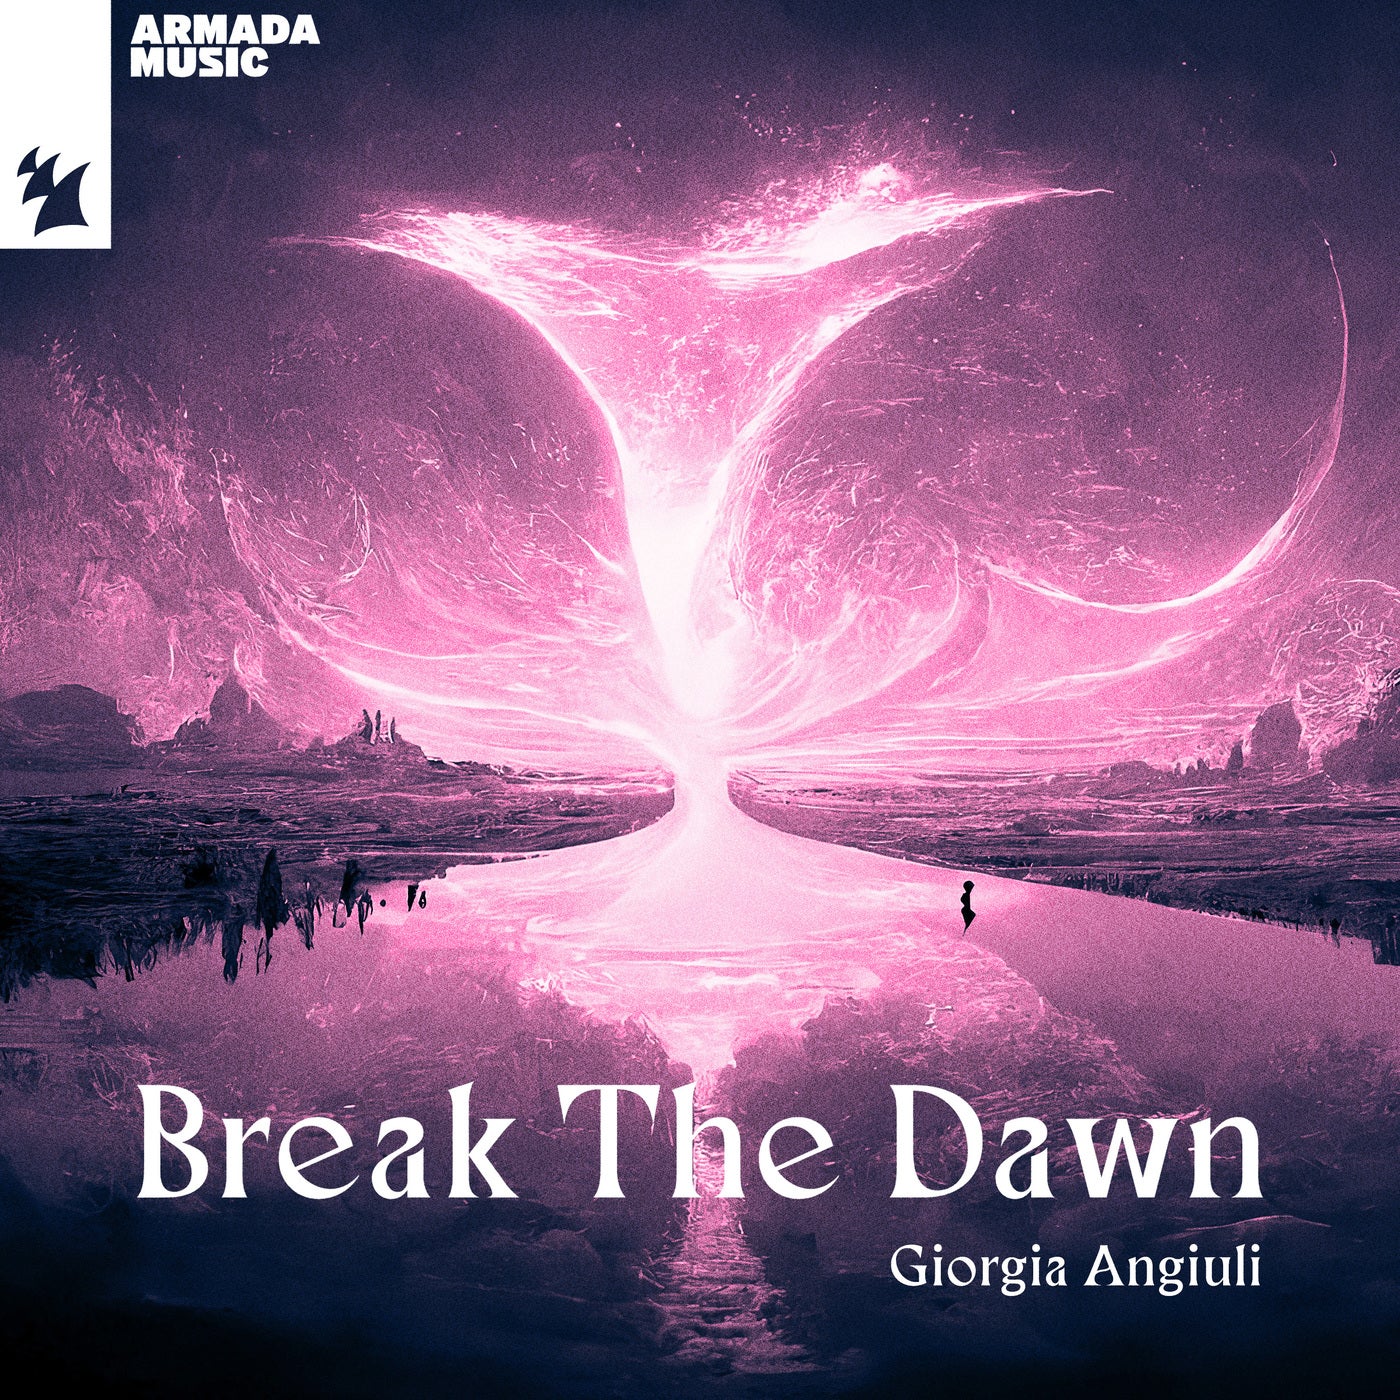 image cover: Giorgia Angiuli - Break The Dawn on Armada Music